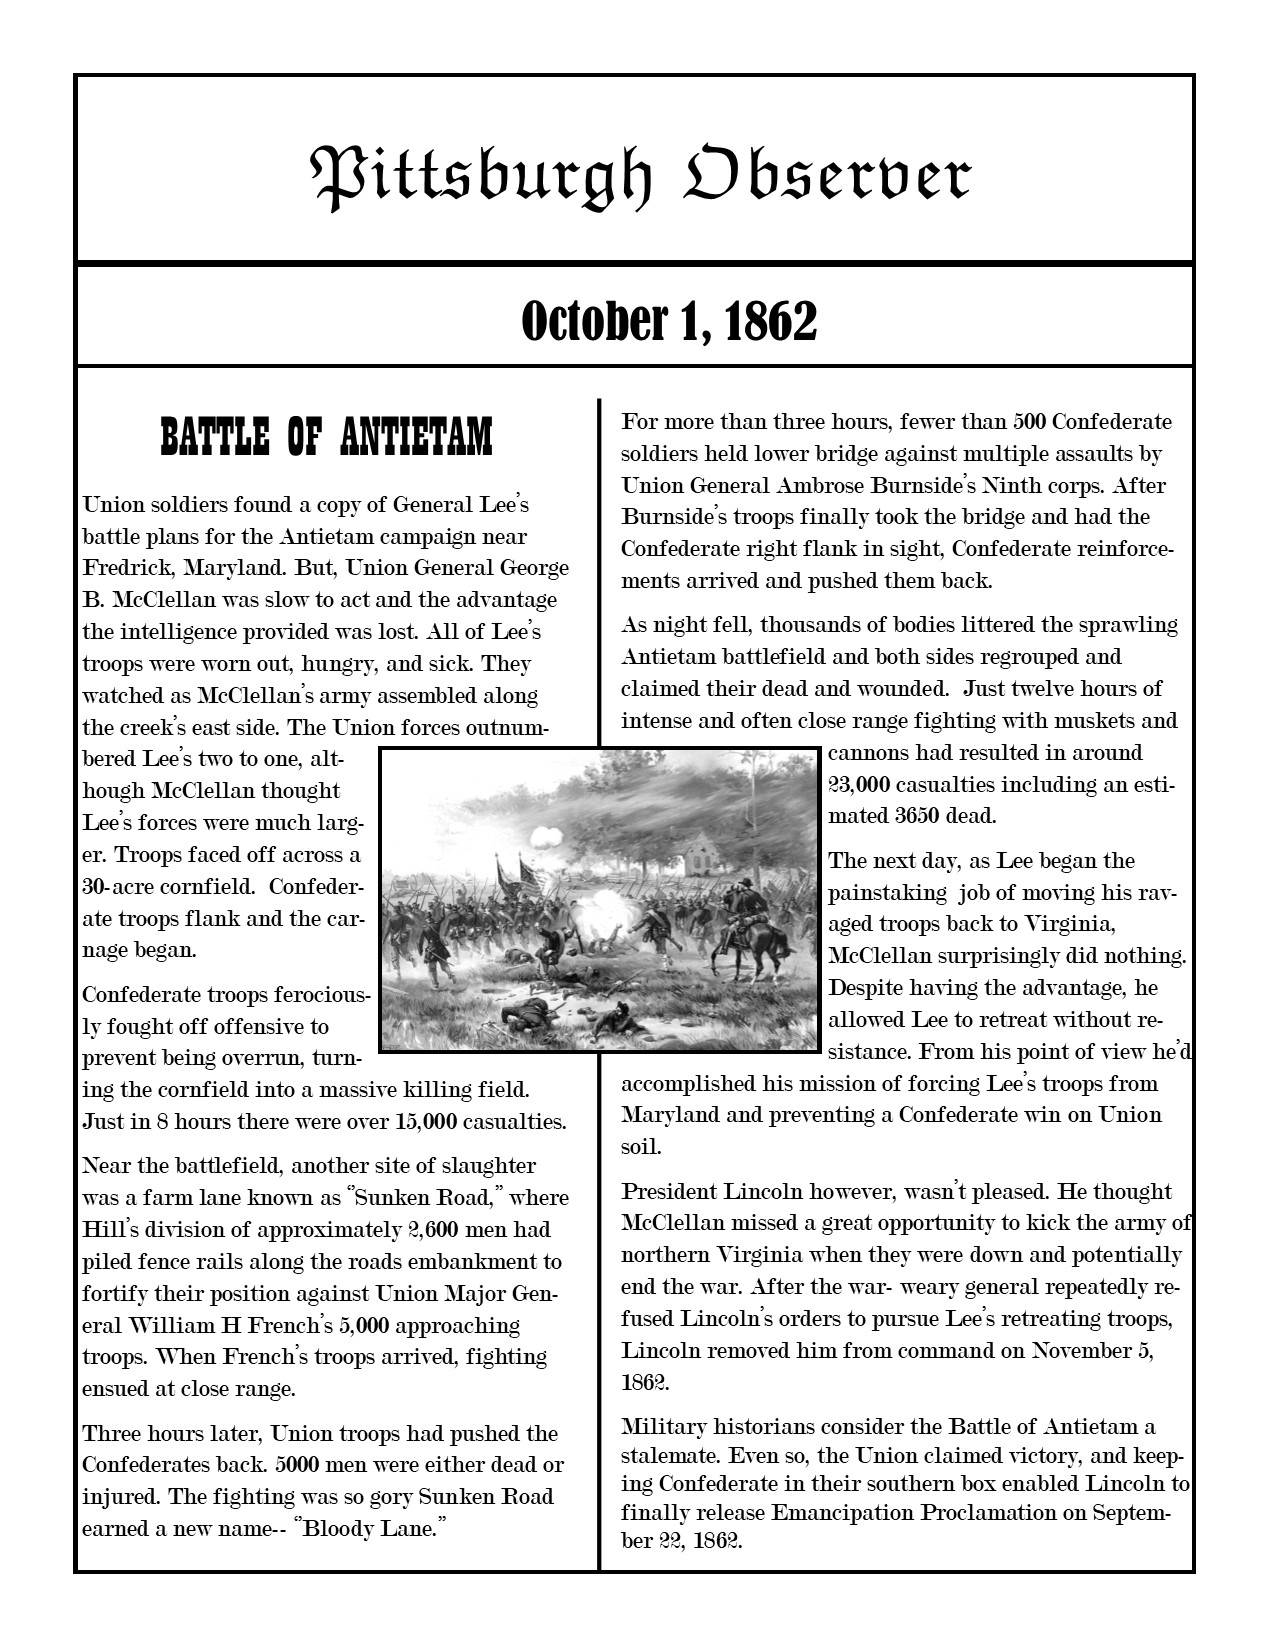 Civil War Newspaper